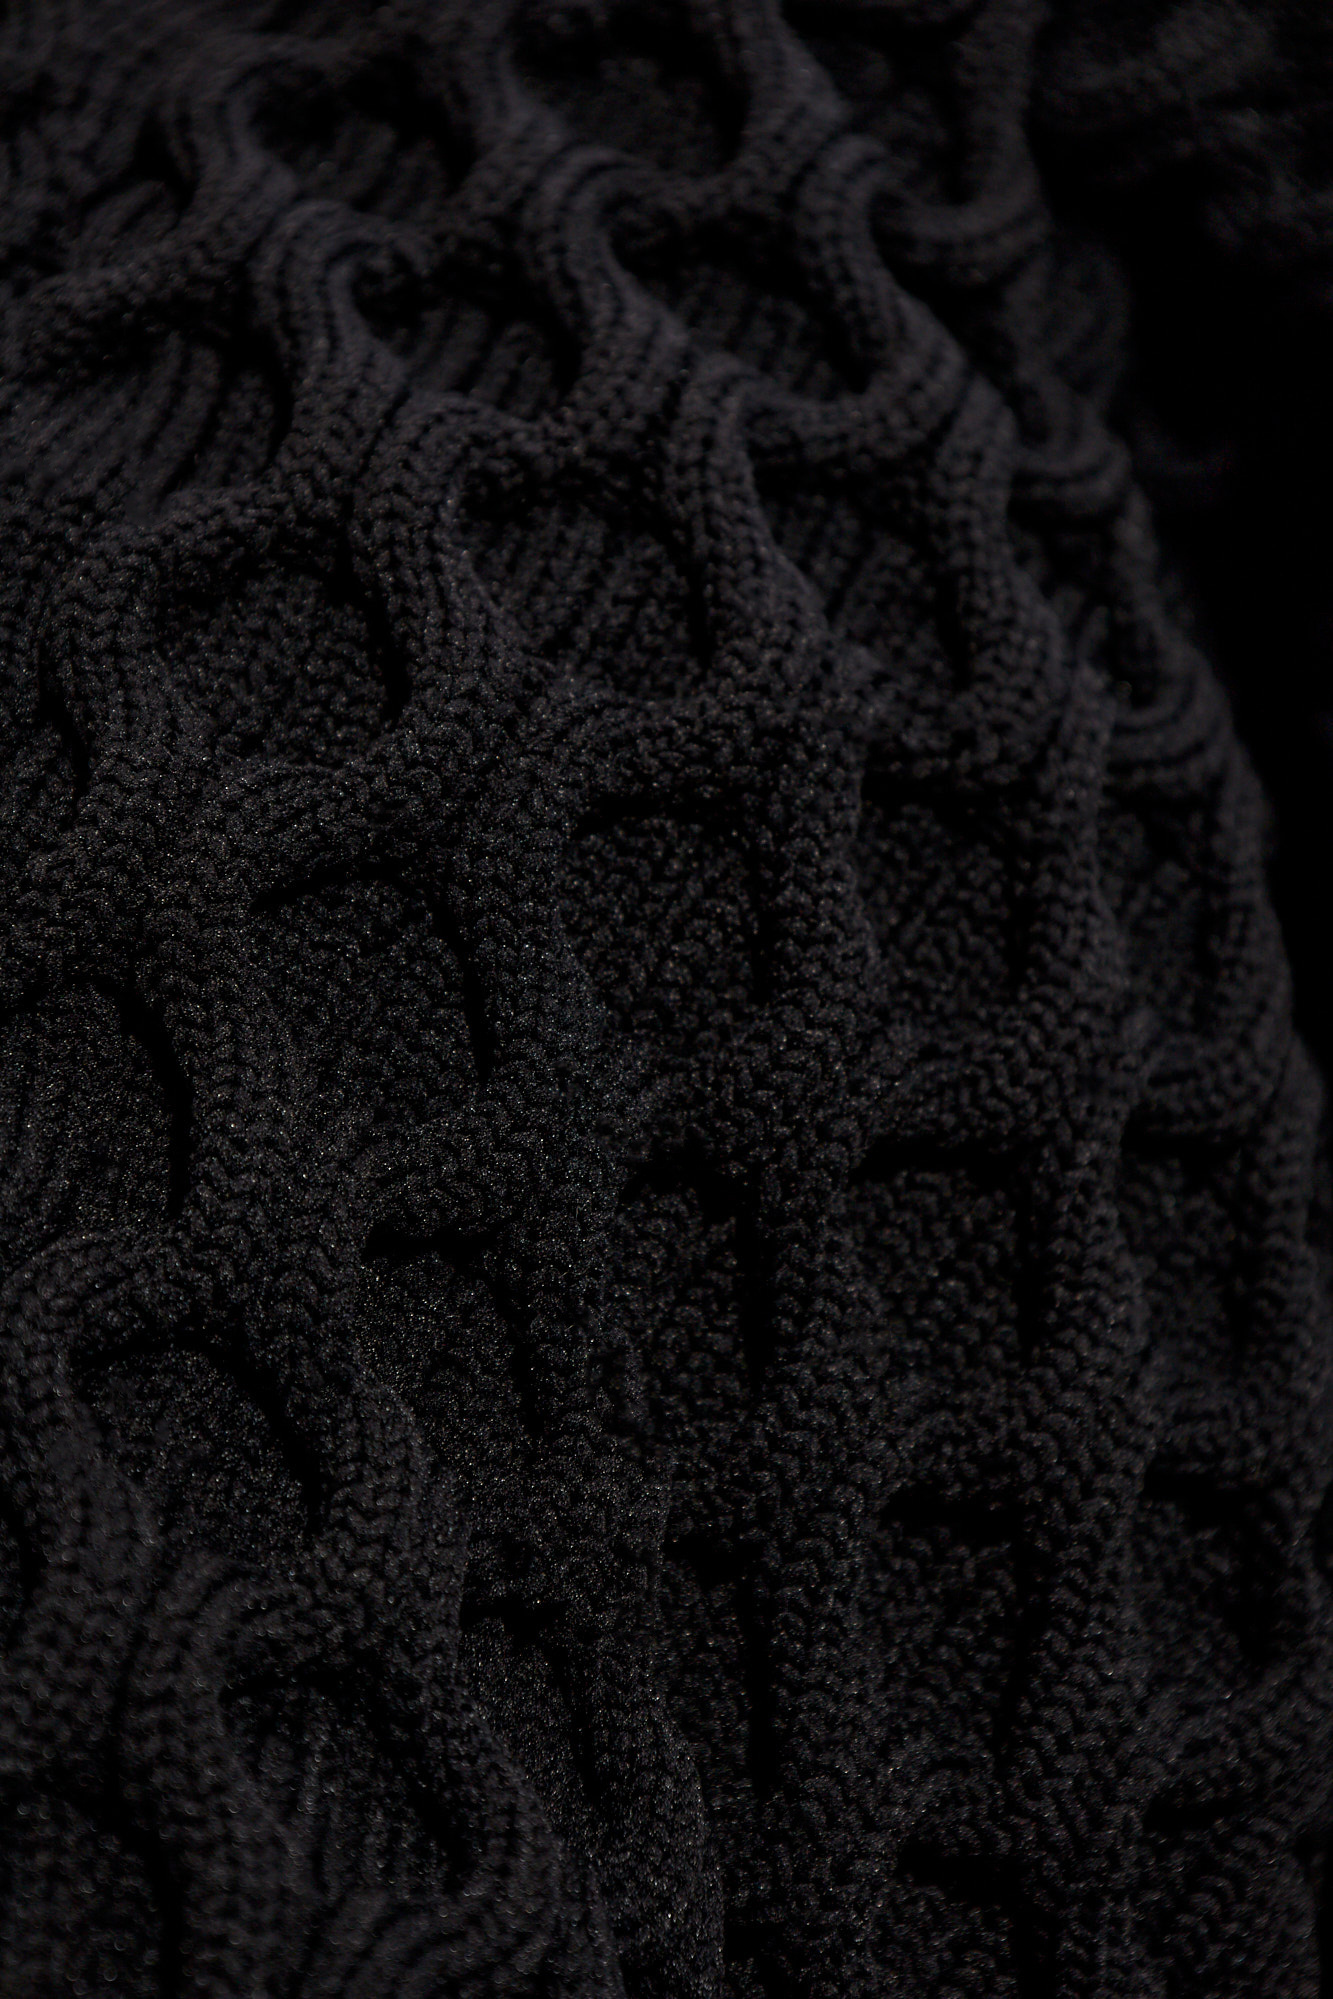 Jacquemus ‘Boule Torsade’ oversize sweater